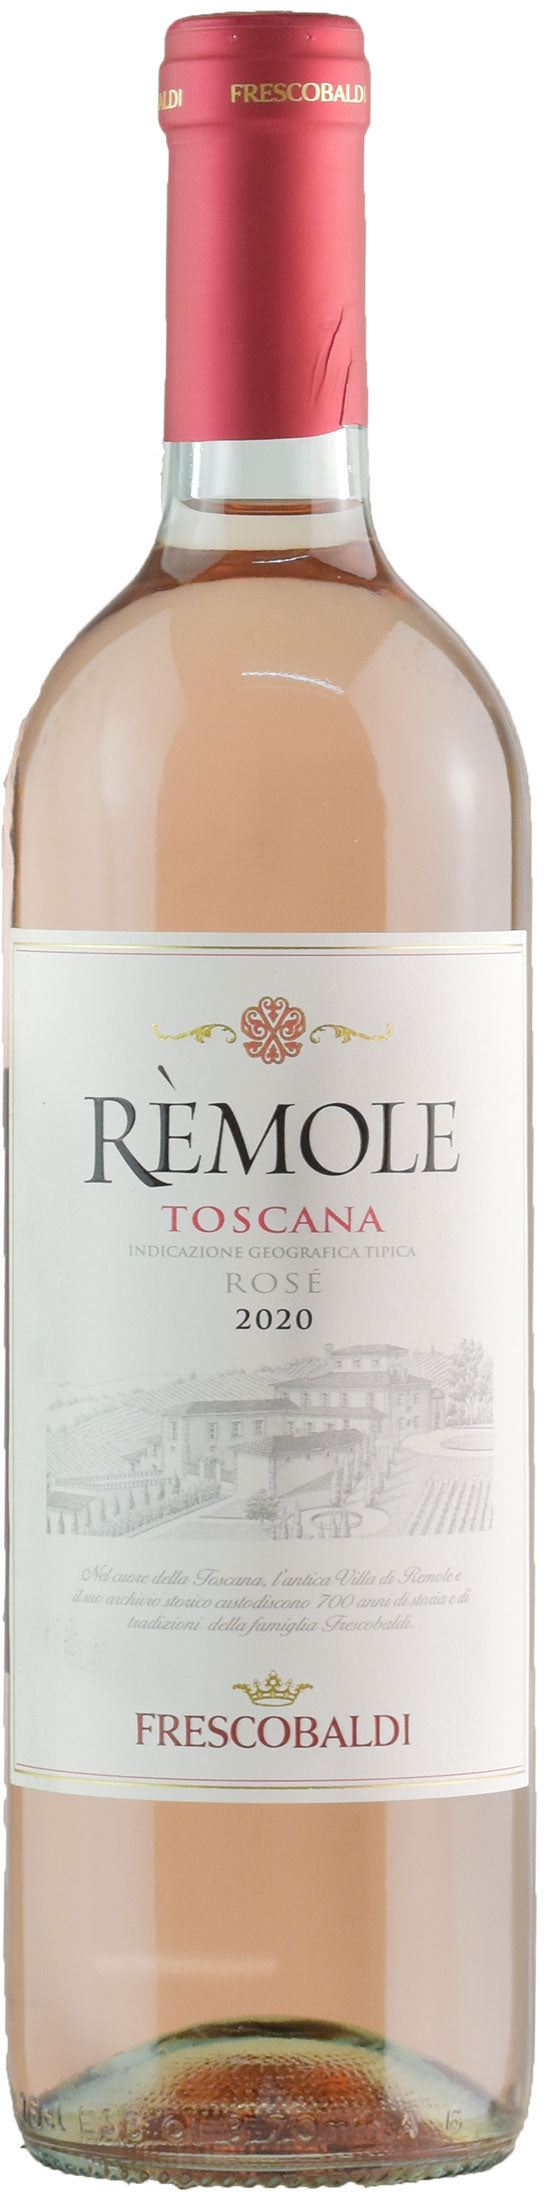 Frescobaldi, Remole Rose, 2020 (Case)